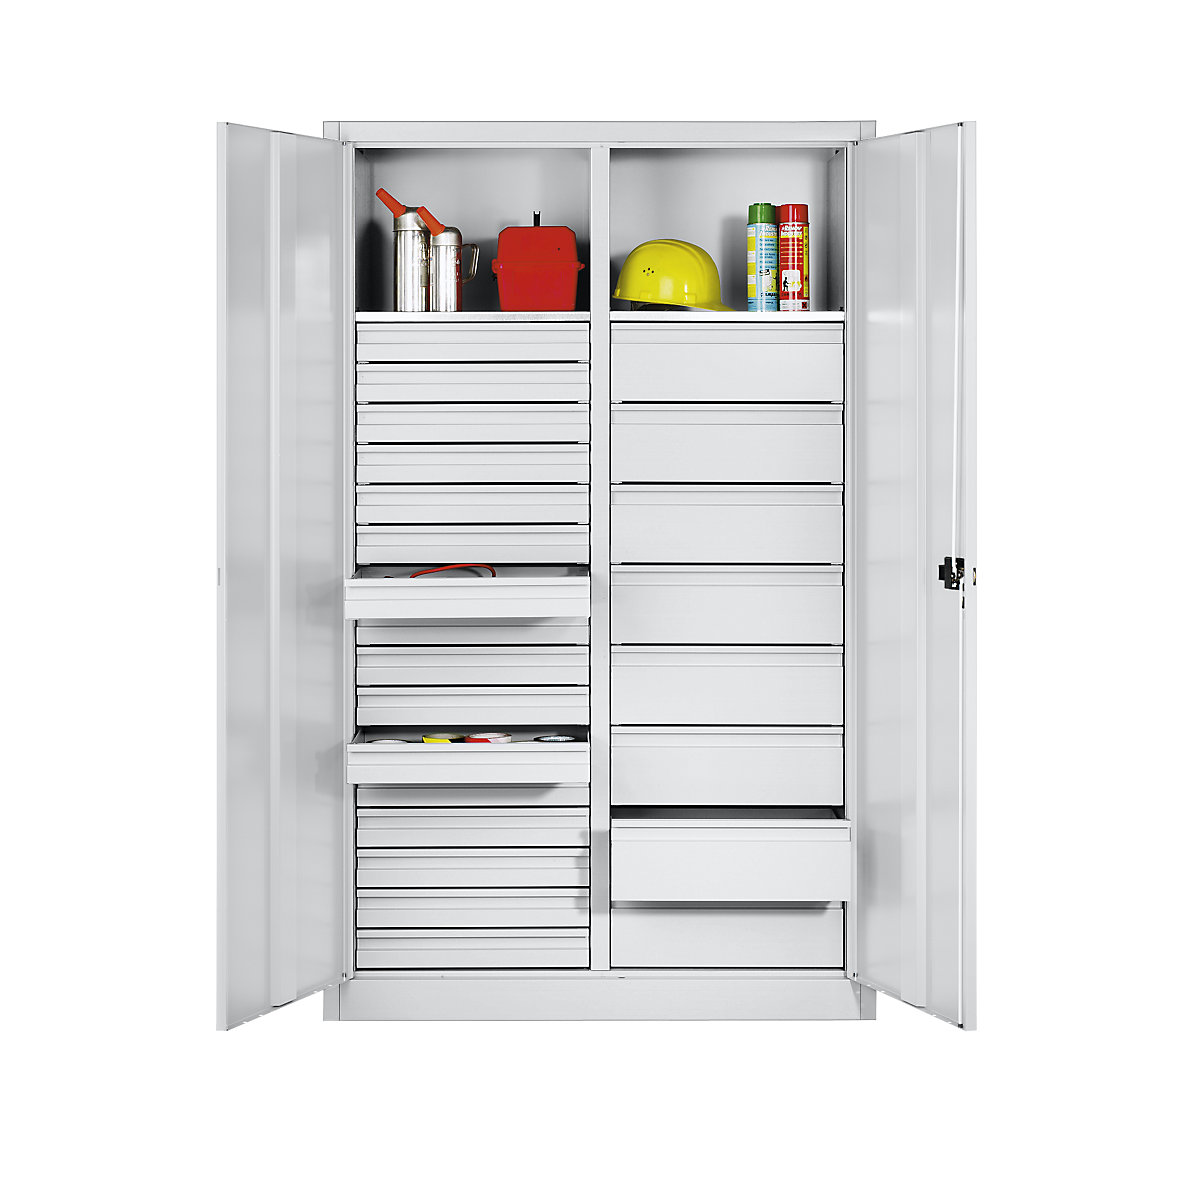 Storage cupboard made of sheet steel – C+P